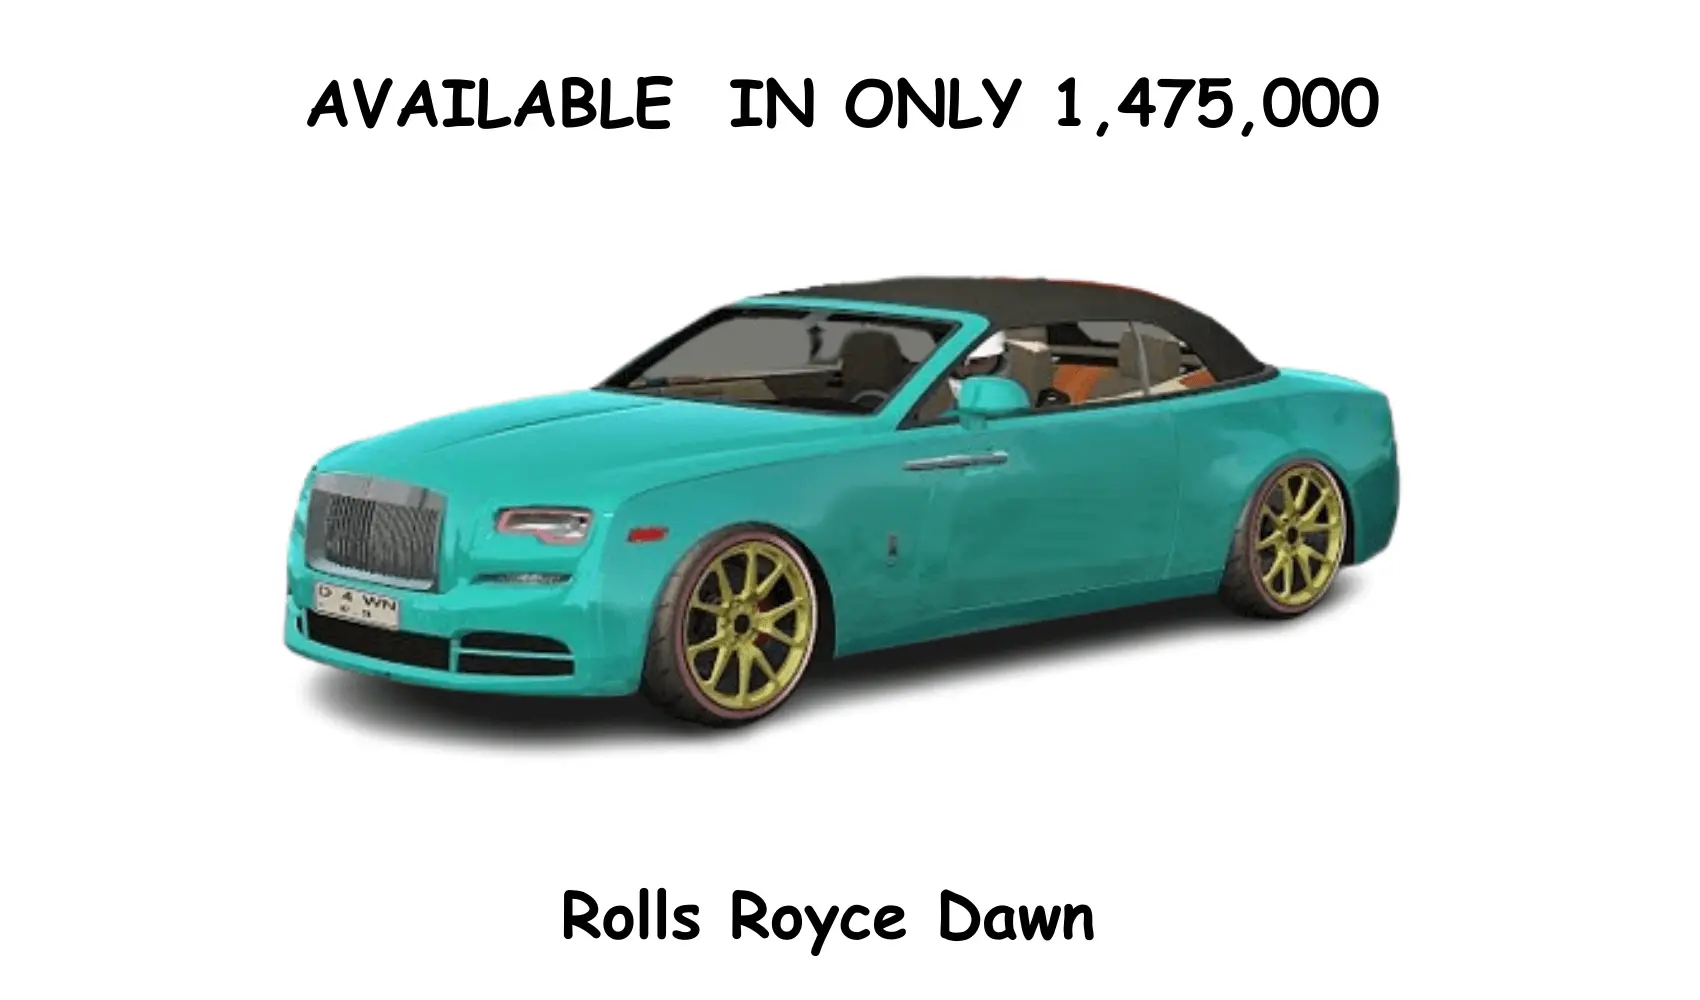 Rolls Royce Dawn Specs PRICE IN CAR PARKING MULTIPLAYER